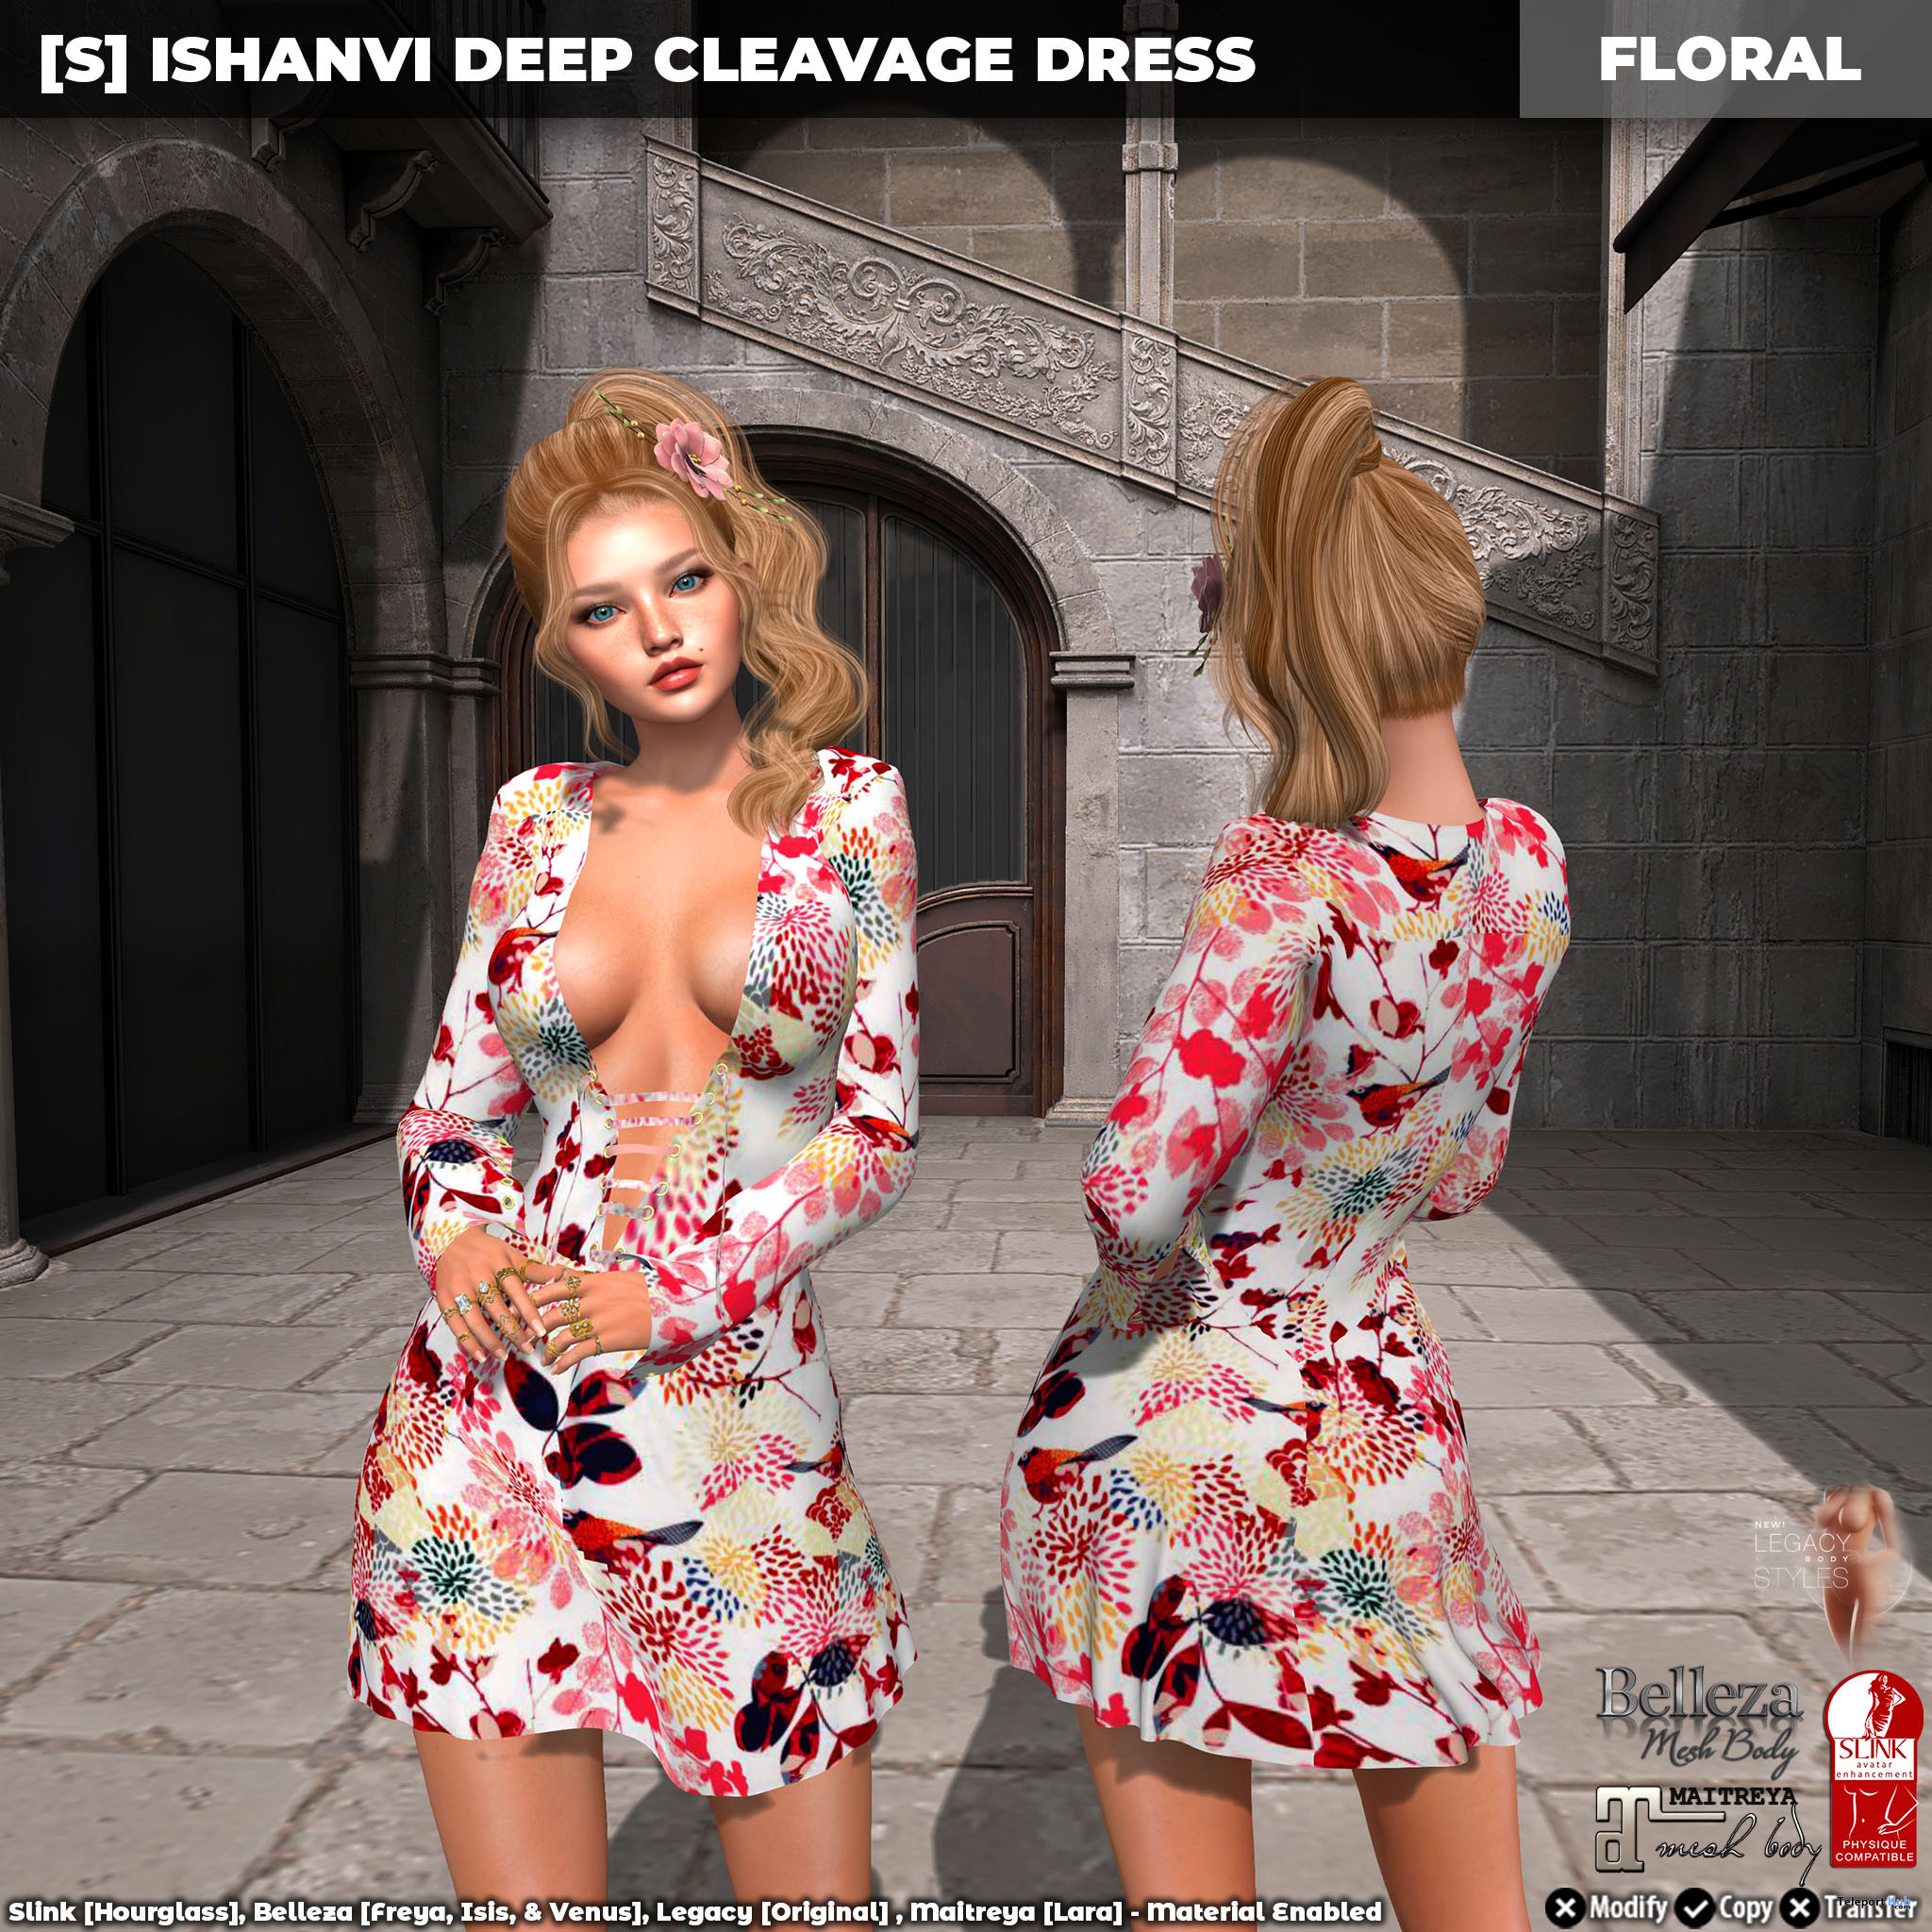 New Release: [S] Ishanvi Deep Cleavage Dress by [satus Inc] - Teleport Hub - teleporthub.com